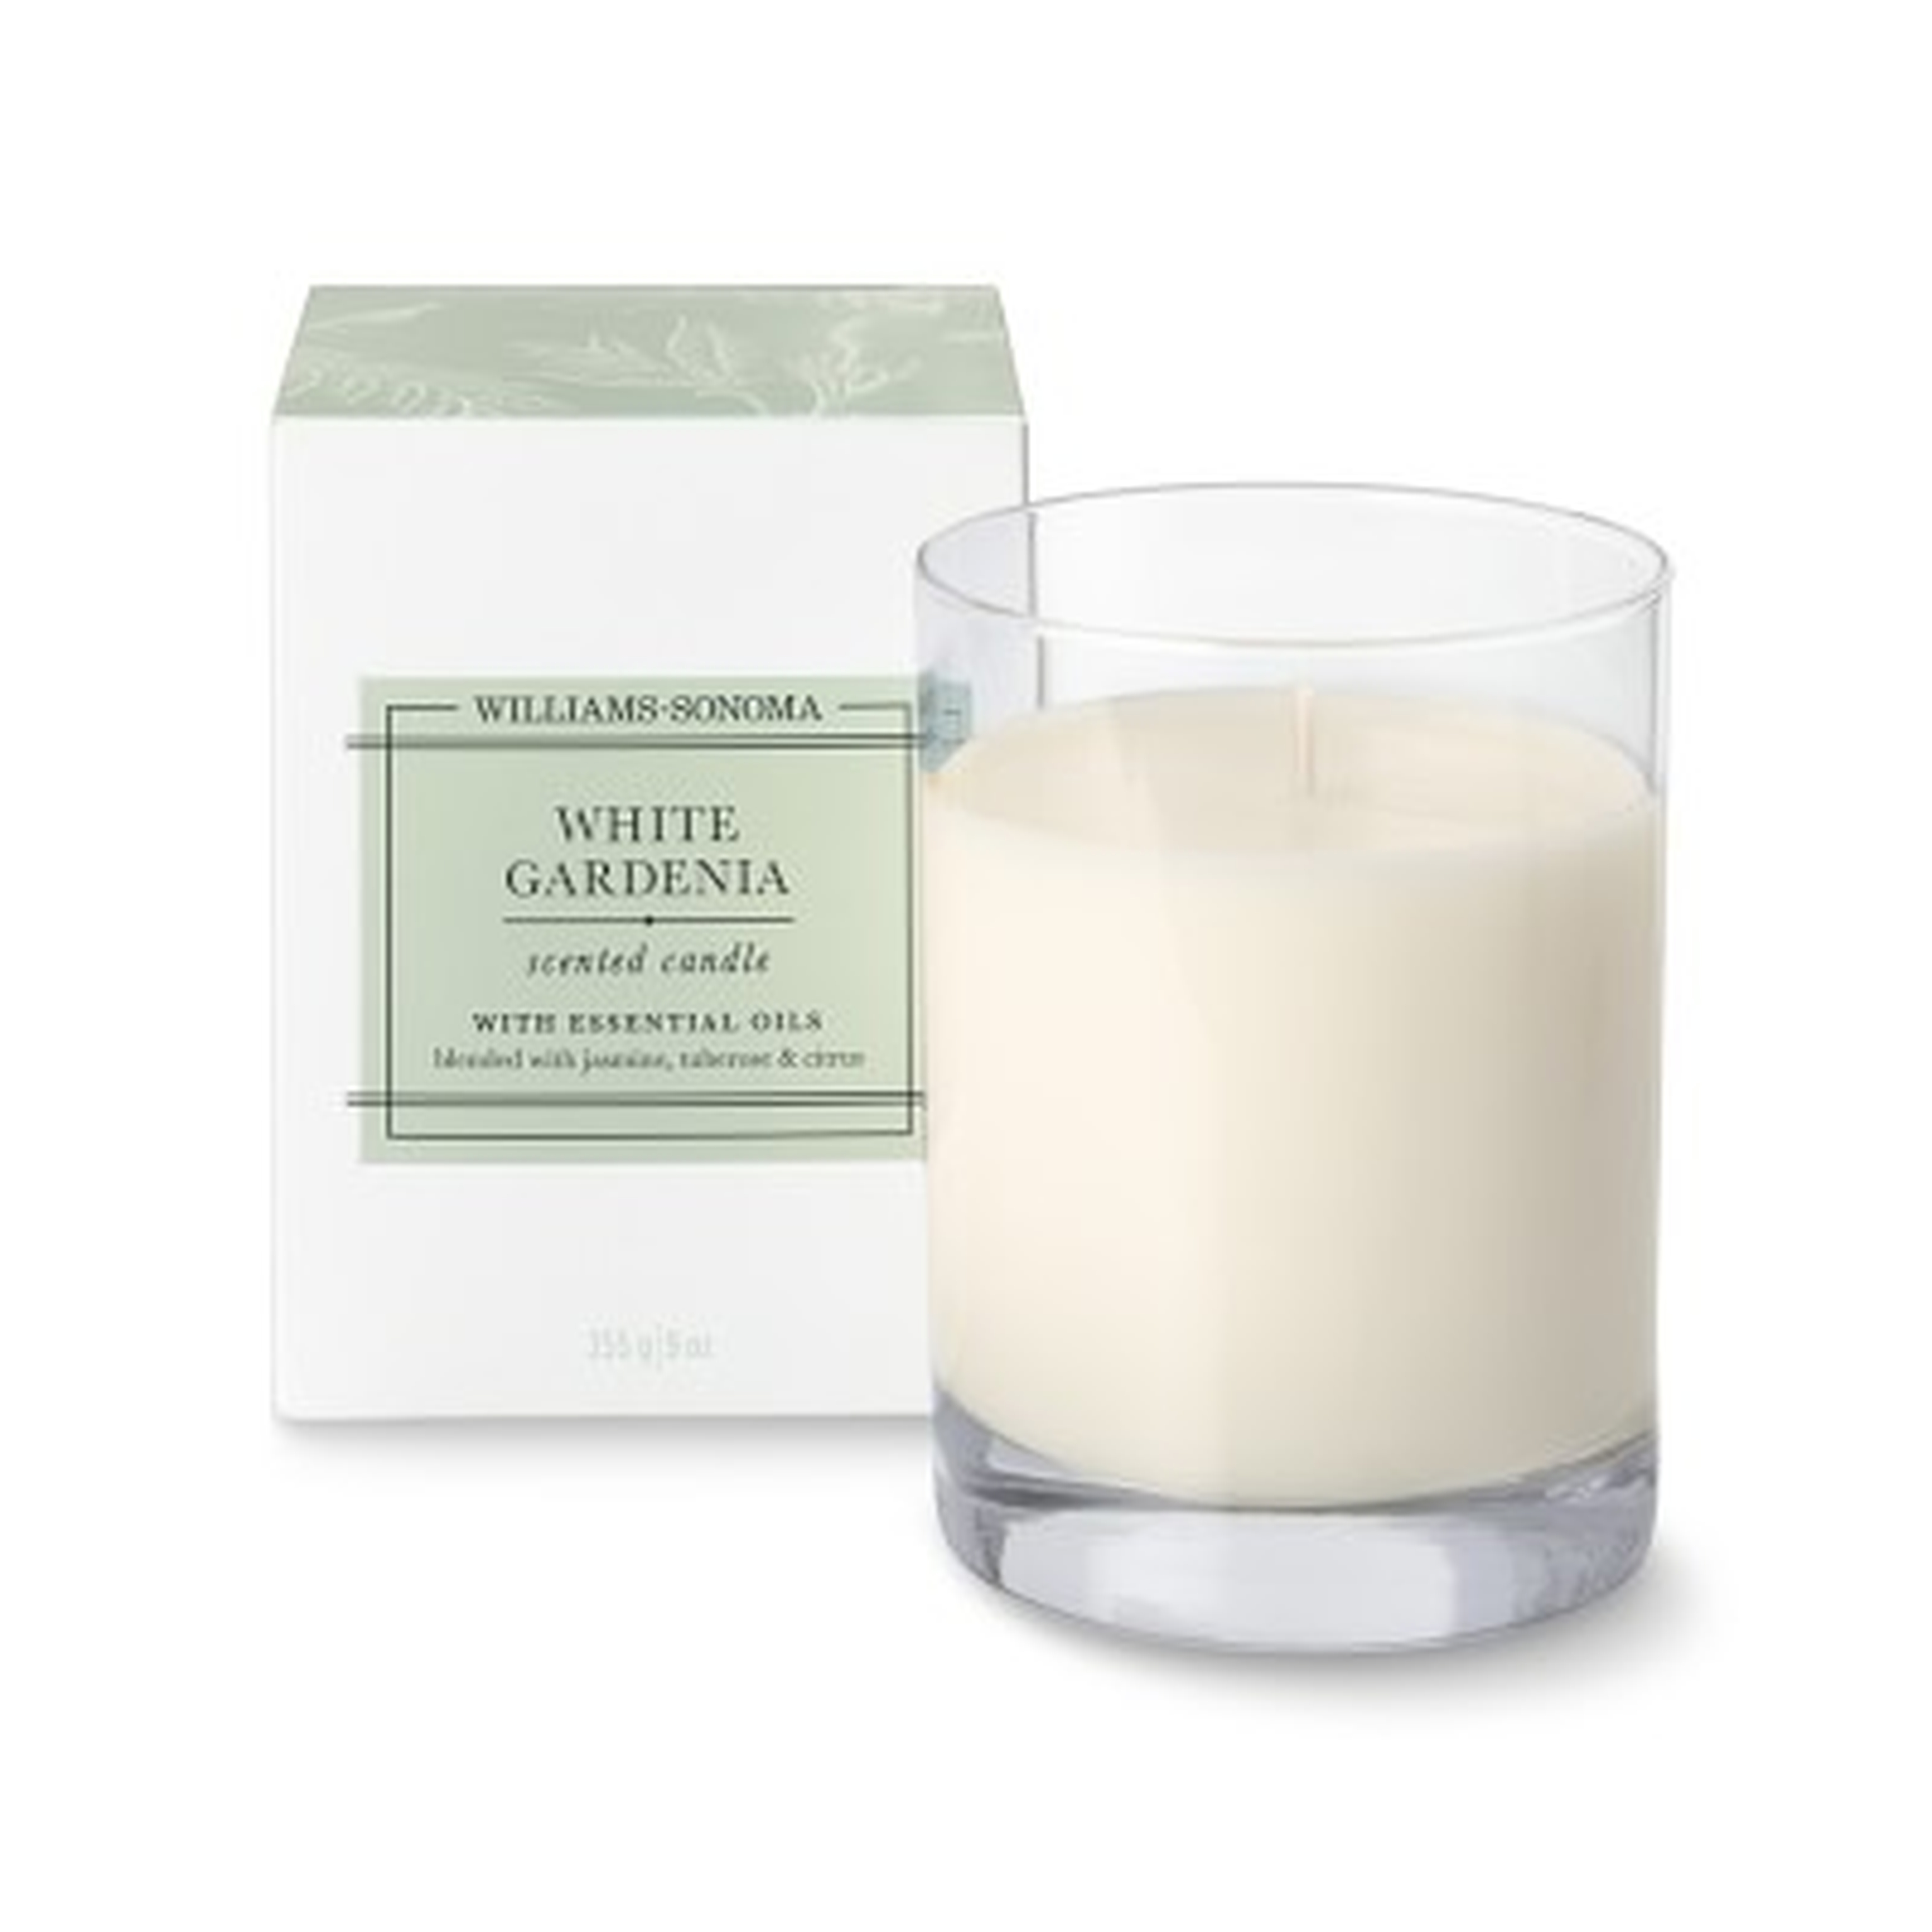 Williams Sonoma Candle, White Gardenia - Williams Sonoma